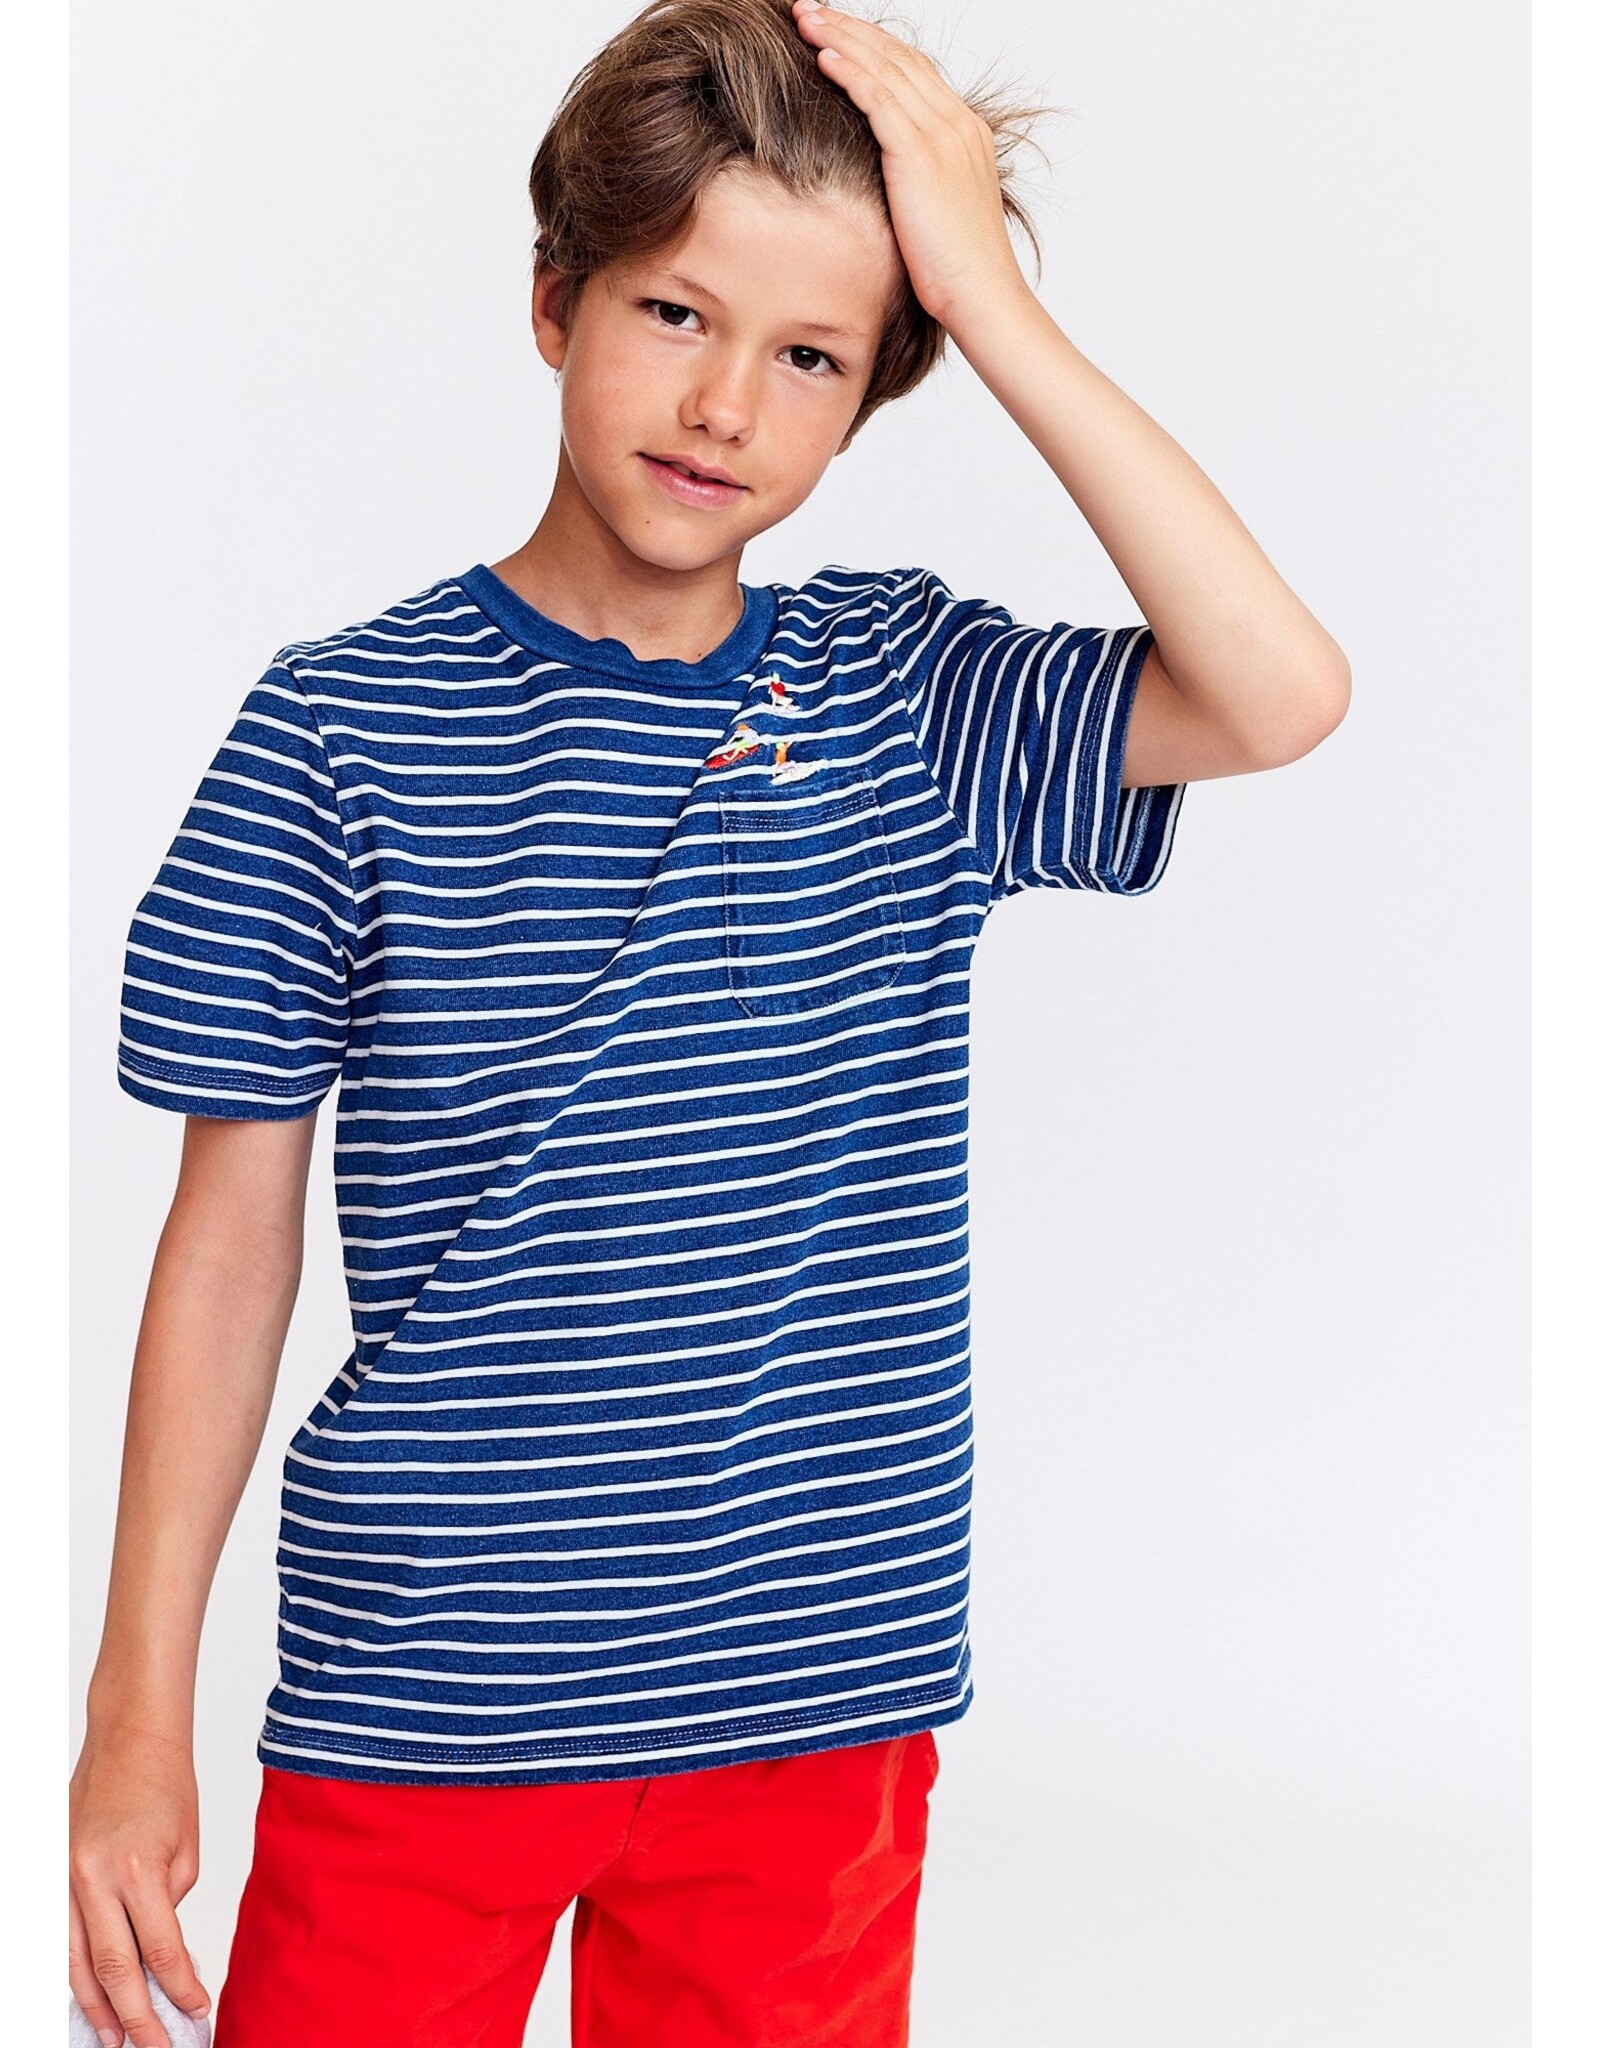 A076 t-shirt mick striped indigo